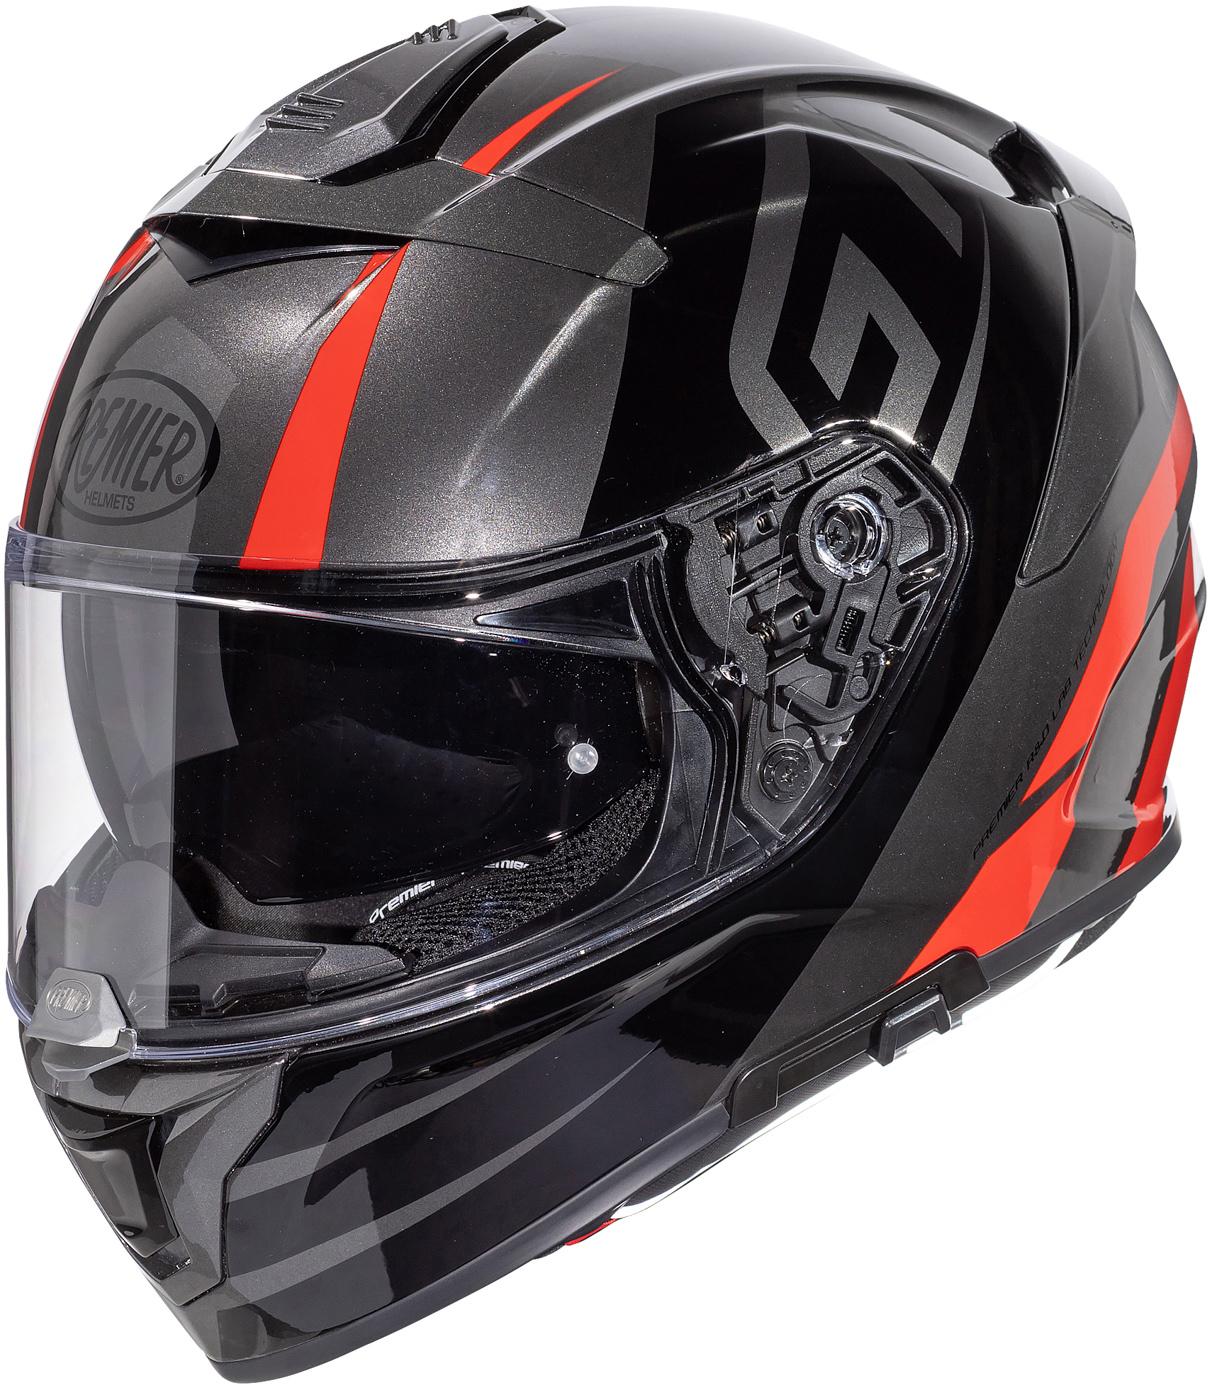 Premier Devil Gt Full Face Motorcycle Helmet - Black/Red, Xl